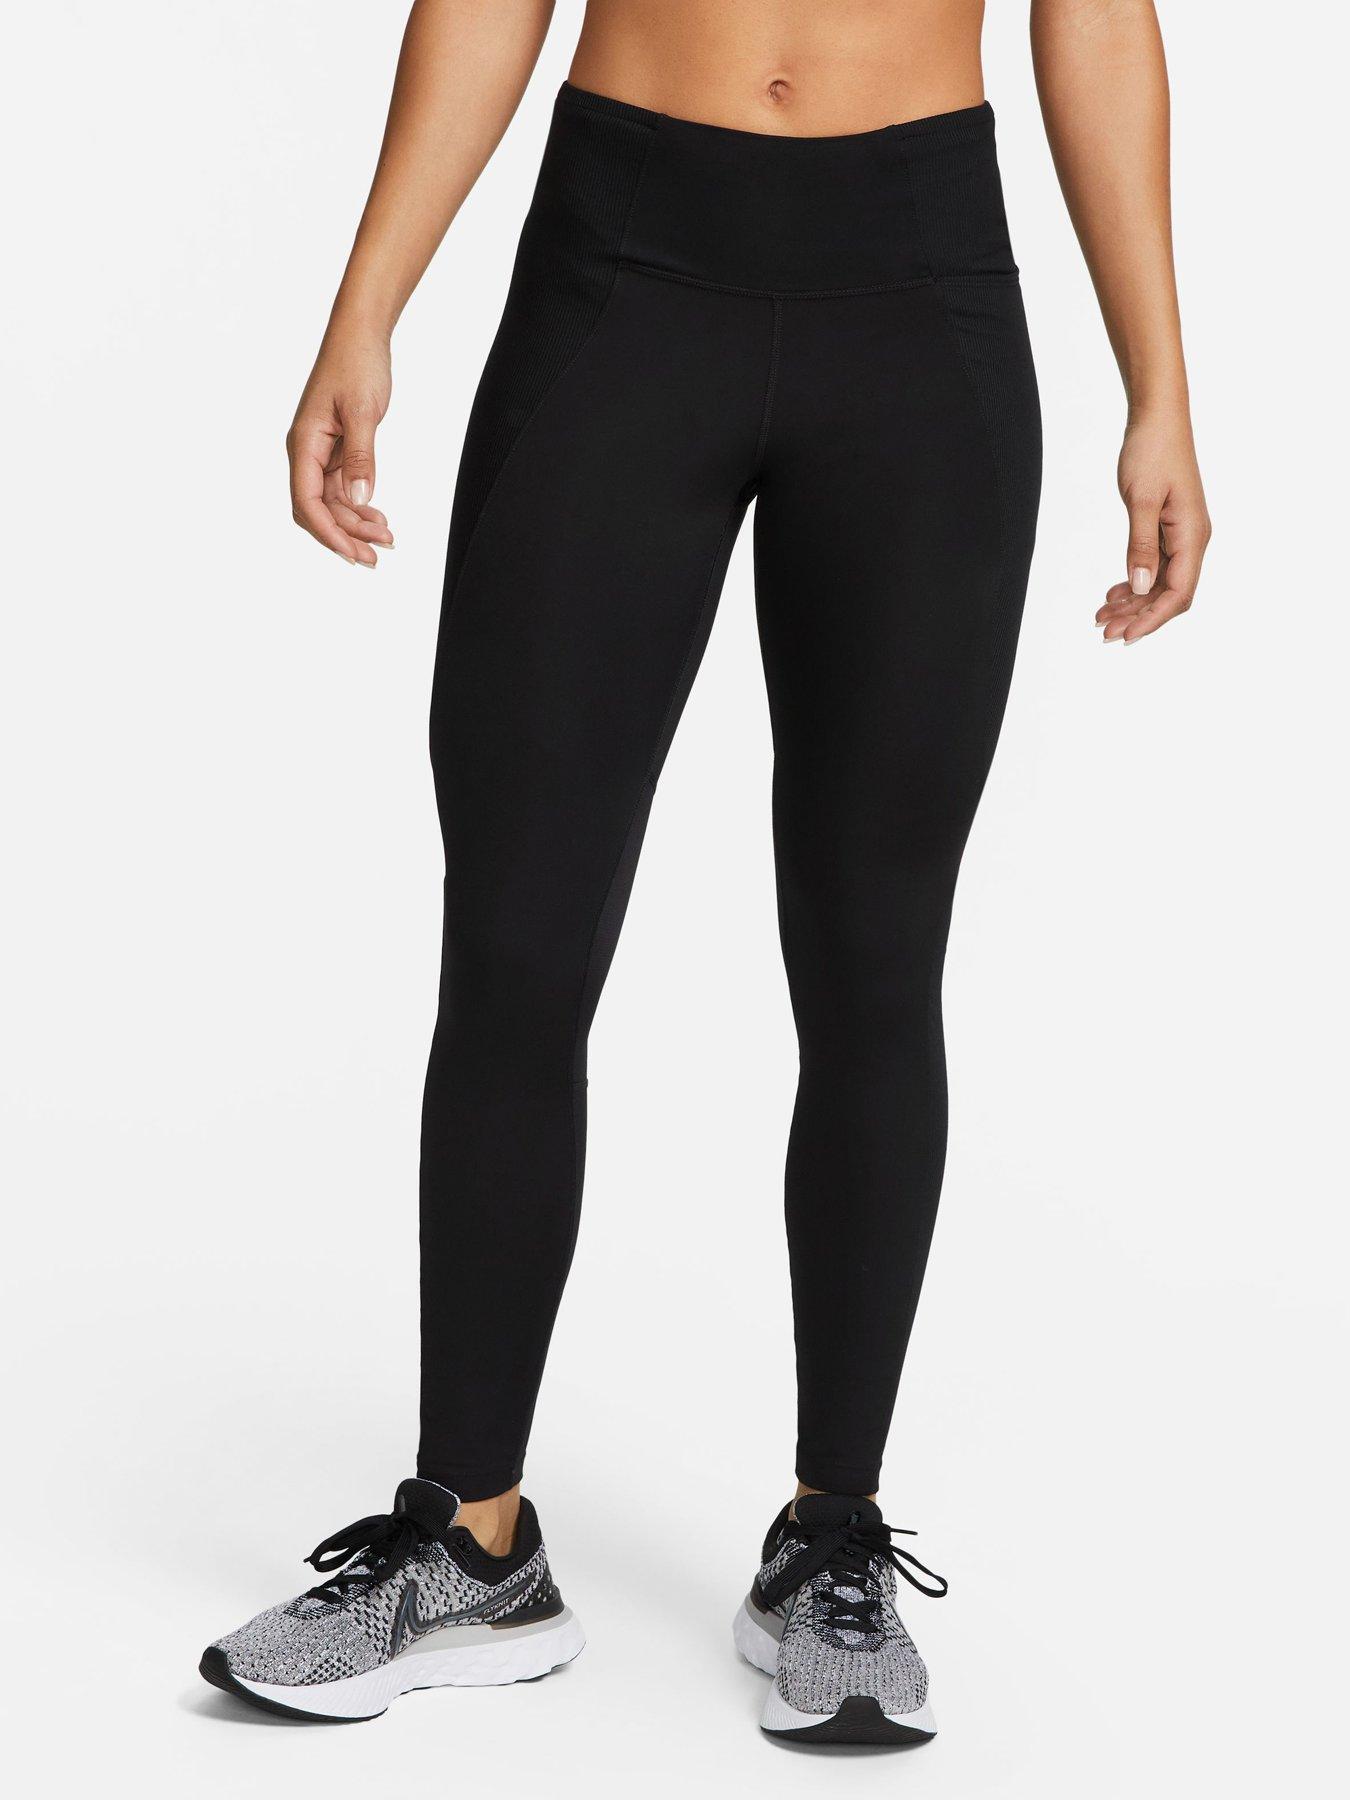 Nike Leggings Black Womens Size SMALL 4-6 Straight Leg Low Rise Active Gym  Train